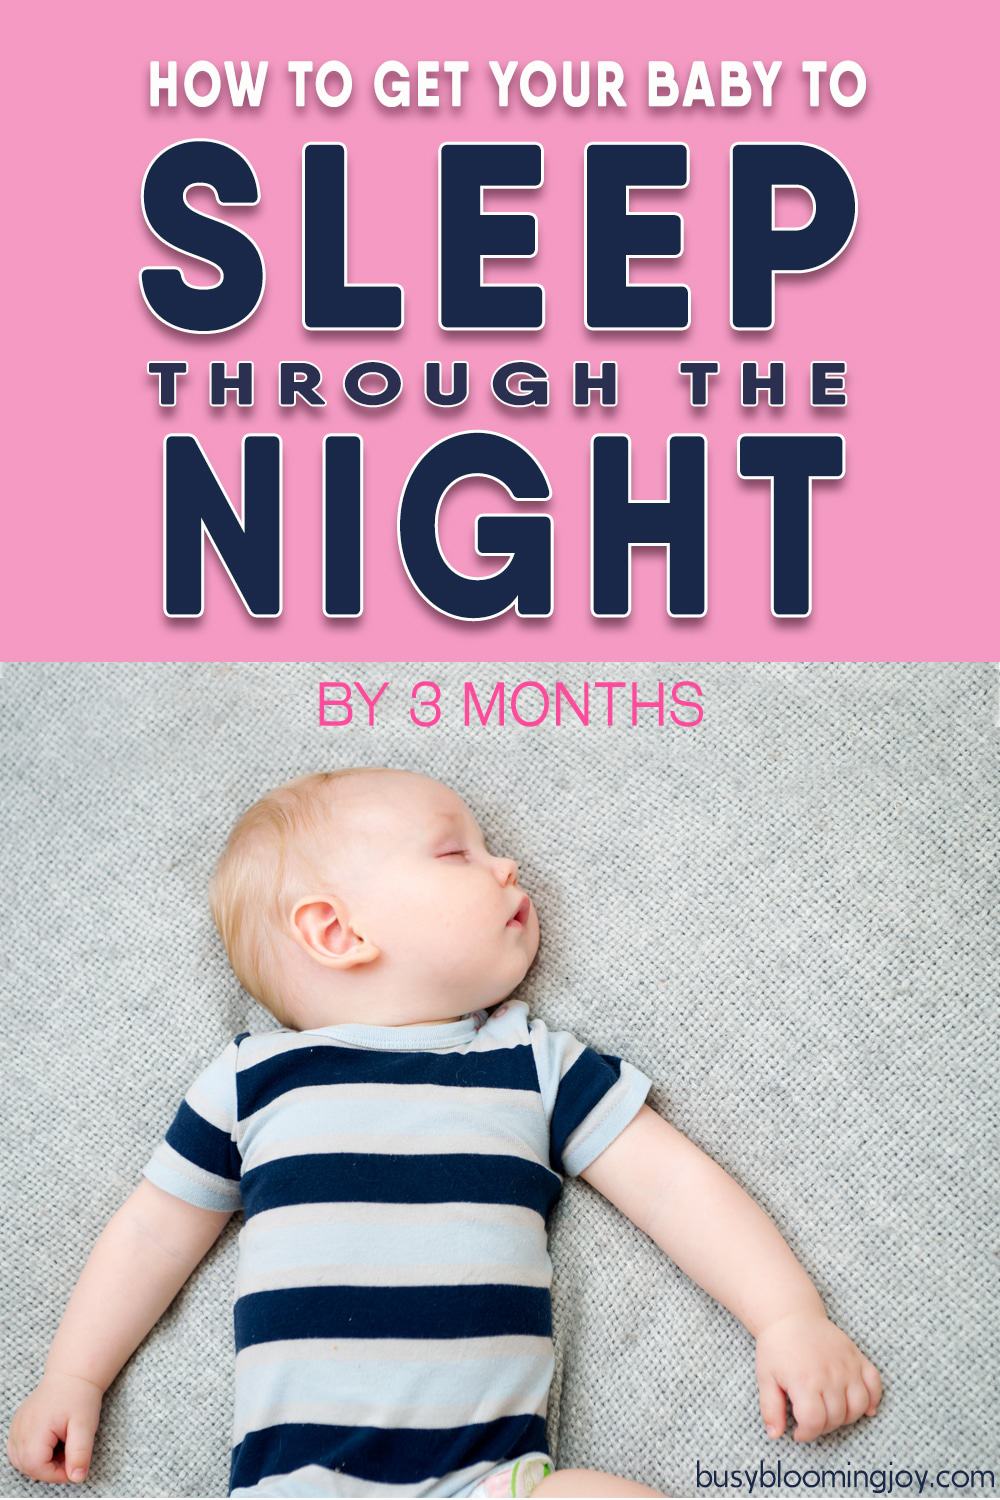 Baby sleep through the night strategies